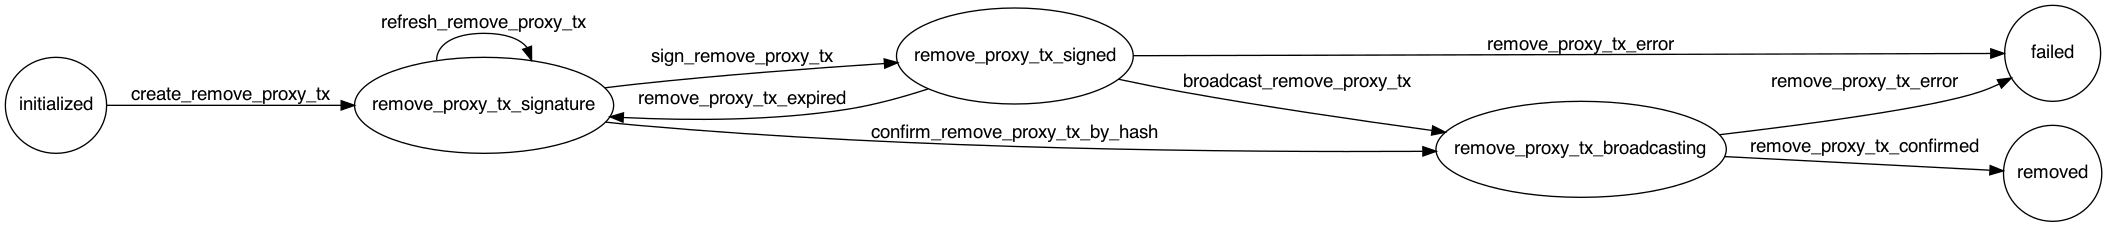 Polkadot Remove Proxy Flow Diagram